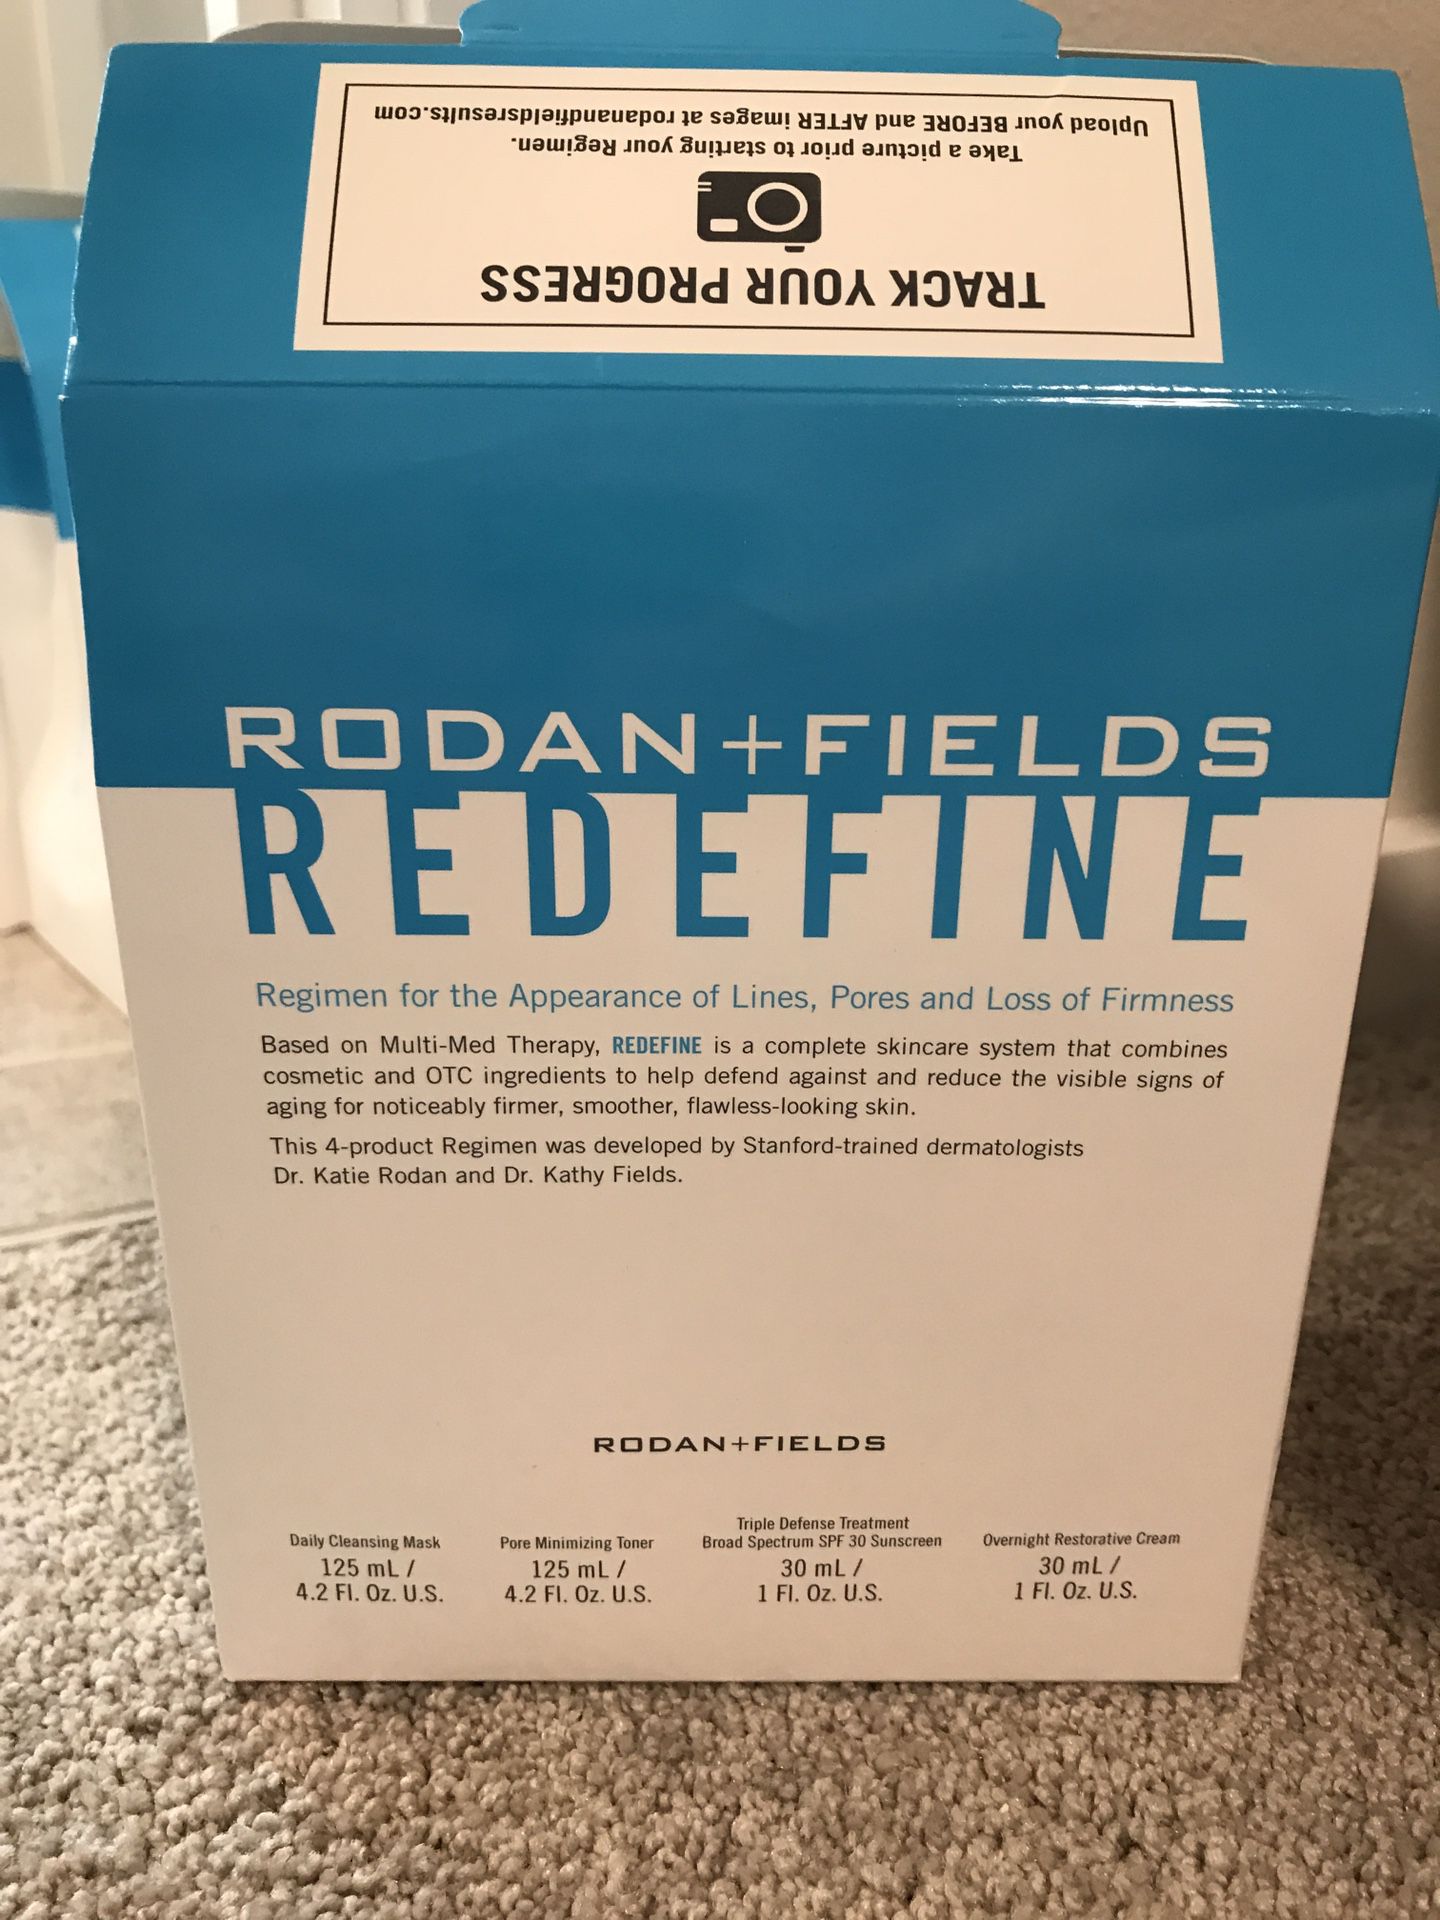 Rodan and fields kits brand new